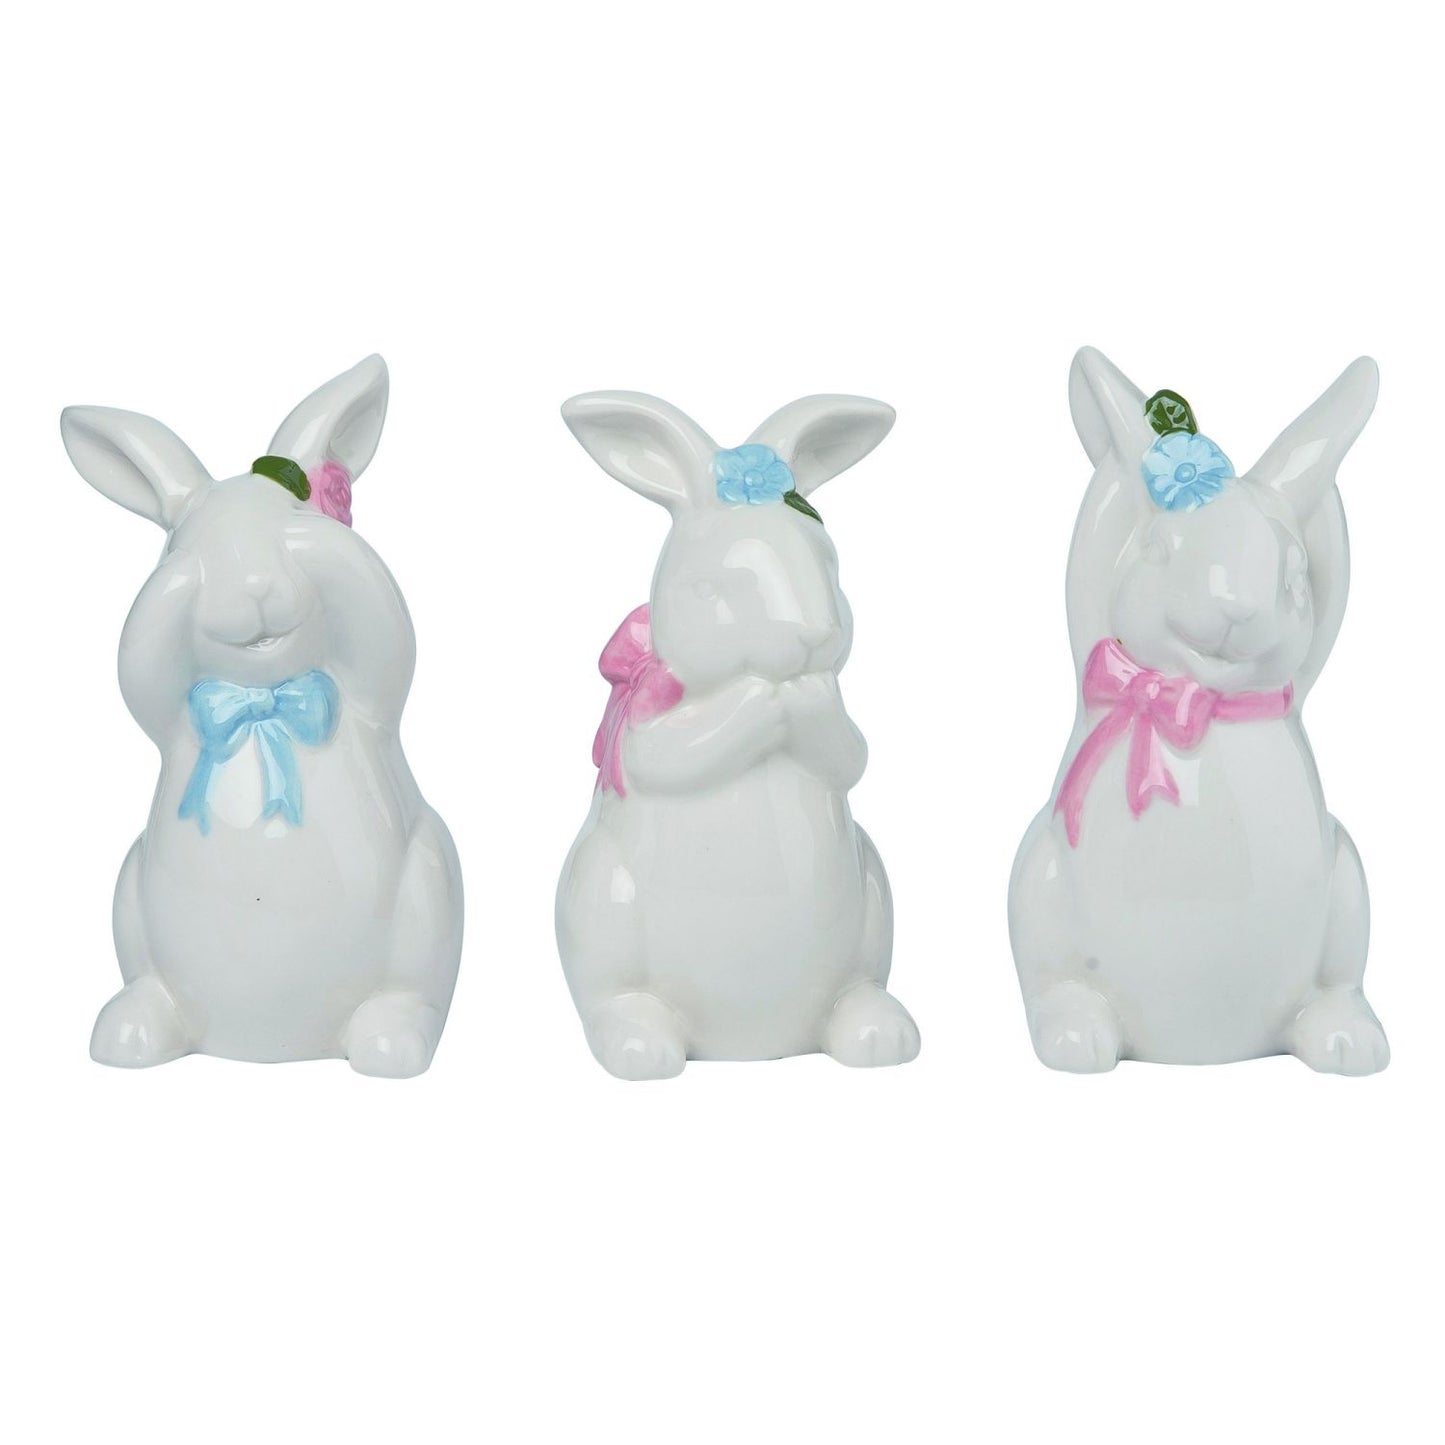 Transpac Ceramic Glazed Bunny Figurine, Set Of 3, Assortment